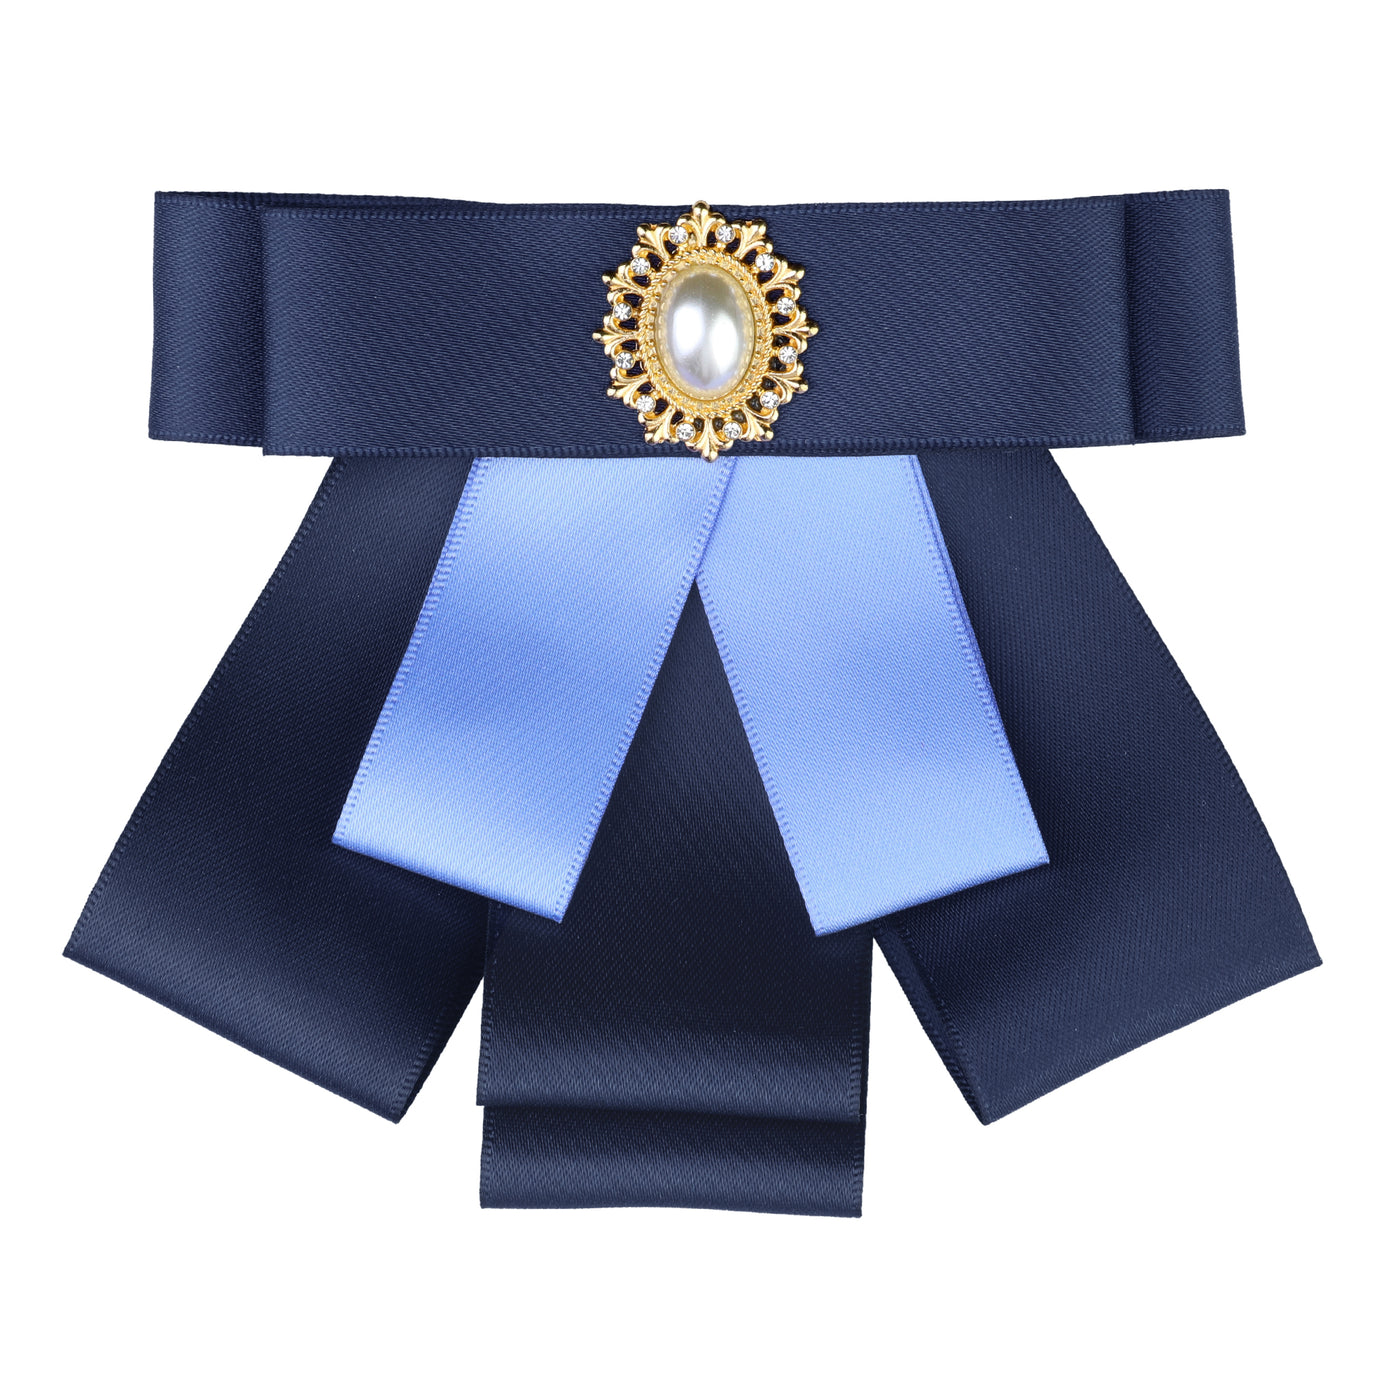 Bublédon Women's Bowknot Ribbon Brooch Elegant Blue Pin Bow Tie Wedding Ceremony